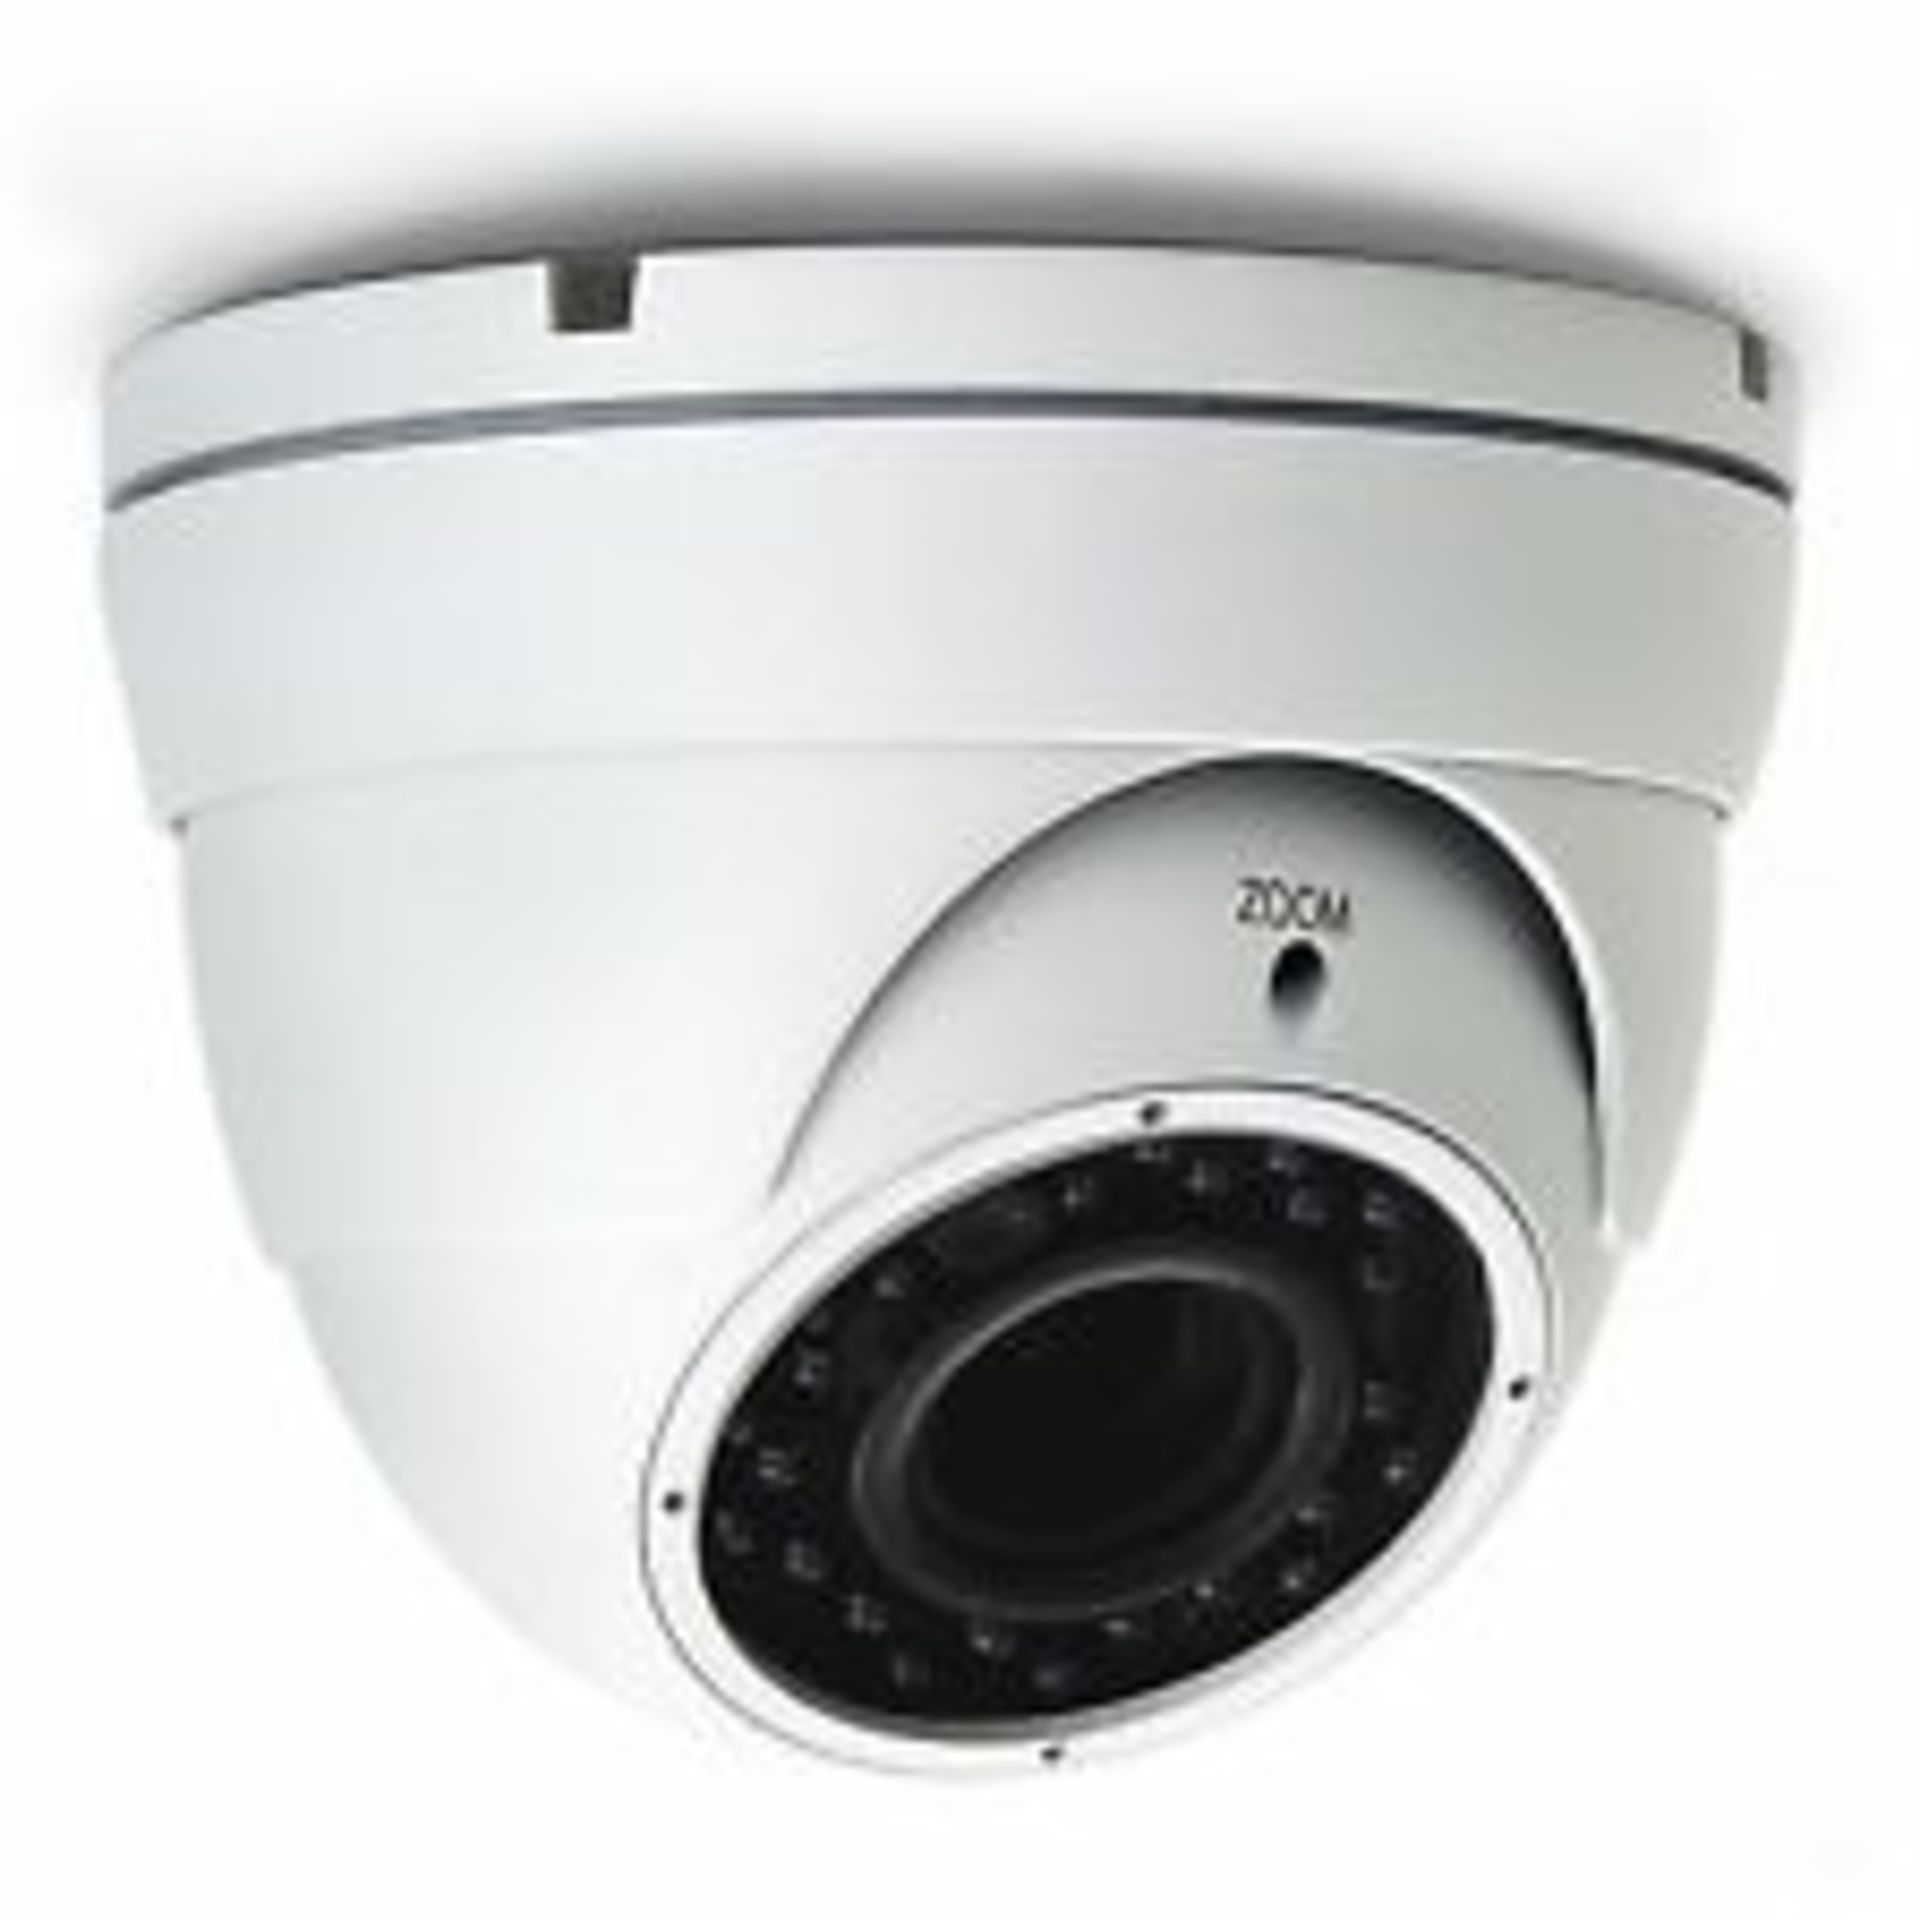 V *TRADE QTY* Brand New Avtech 540TVL Eyeball IR Dome Camera - 1/3" Sony CCD IP65 -White X 4 YOUR